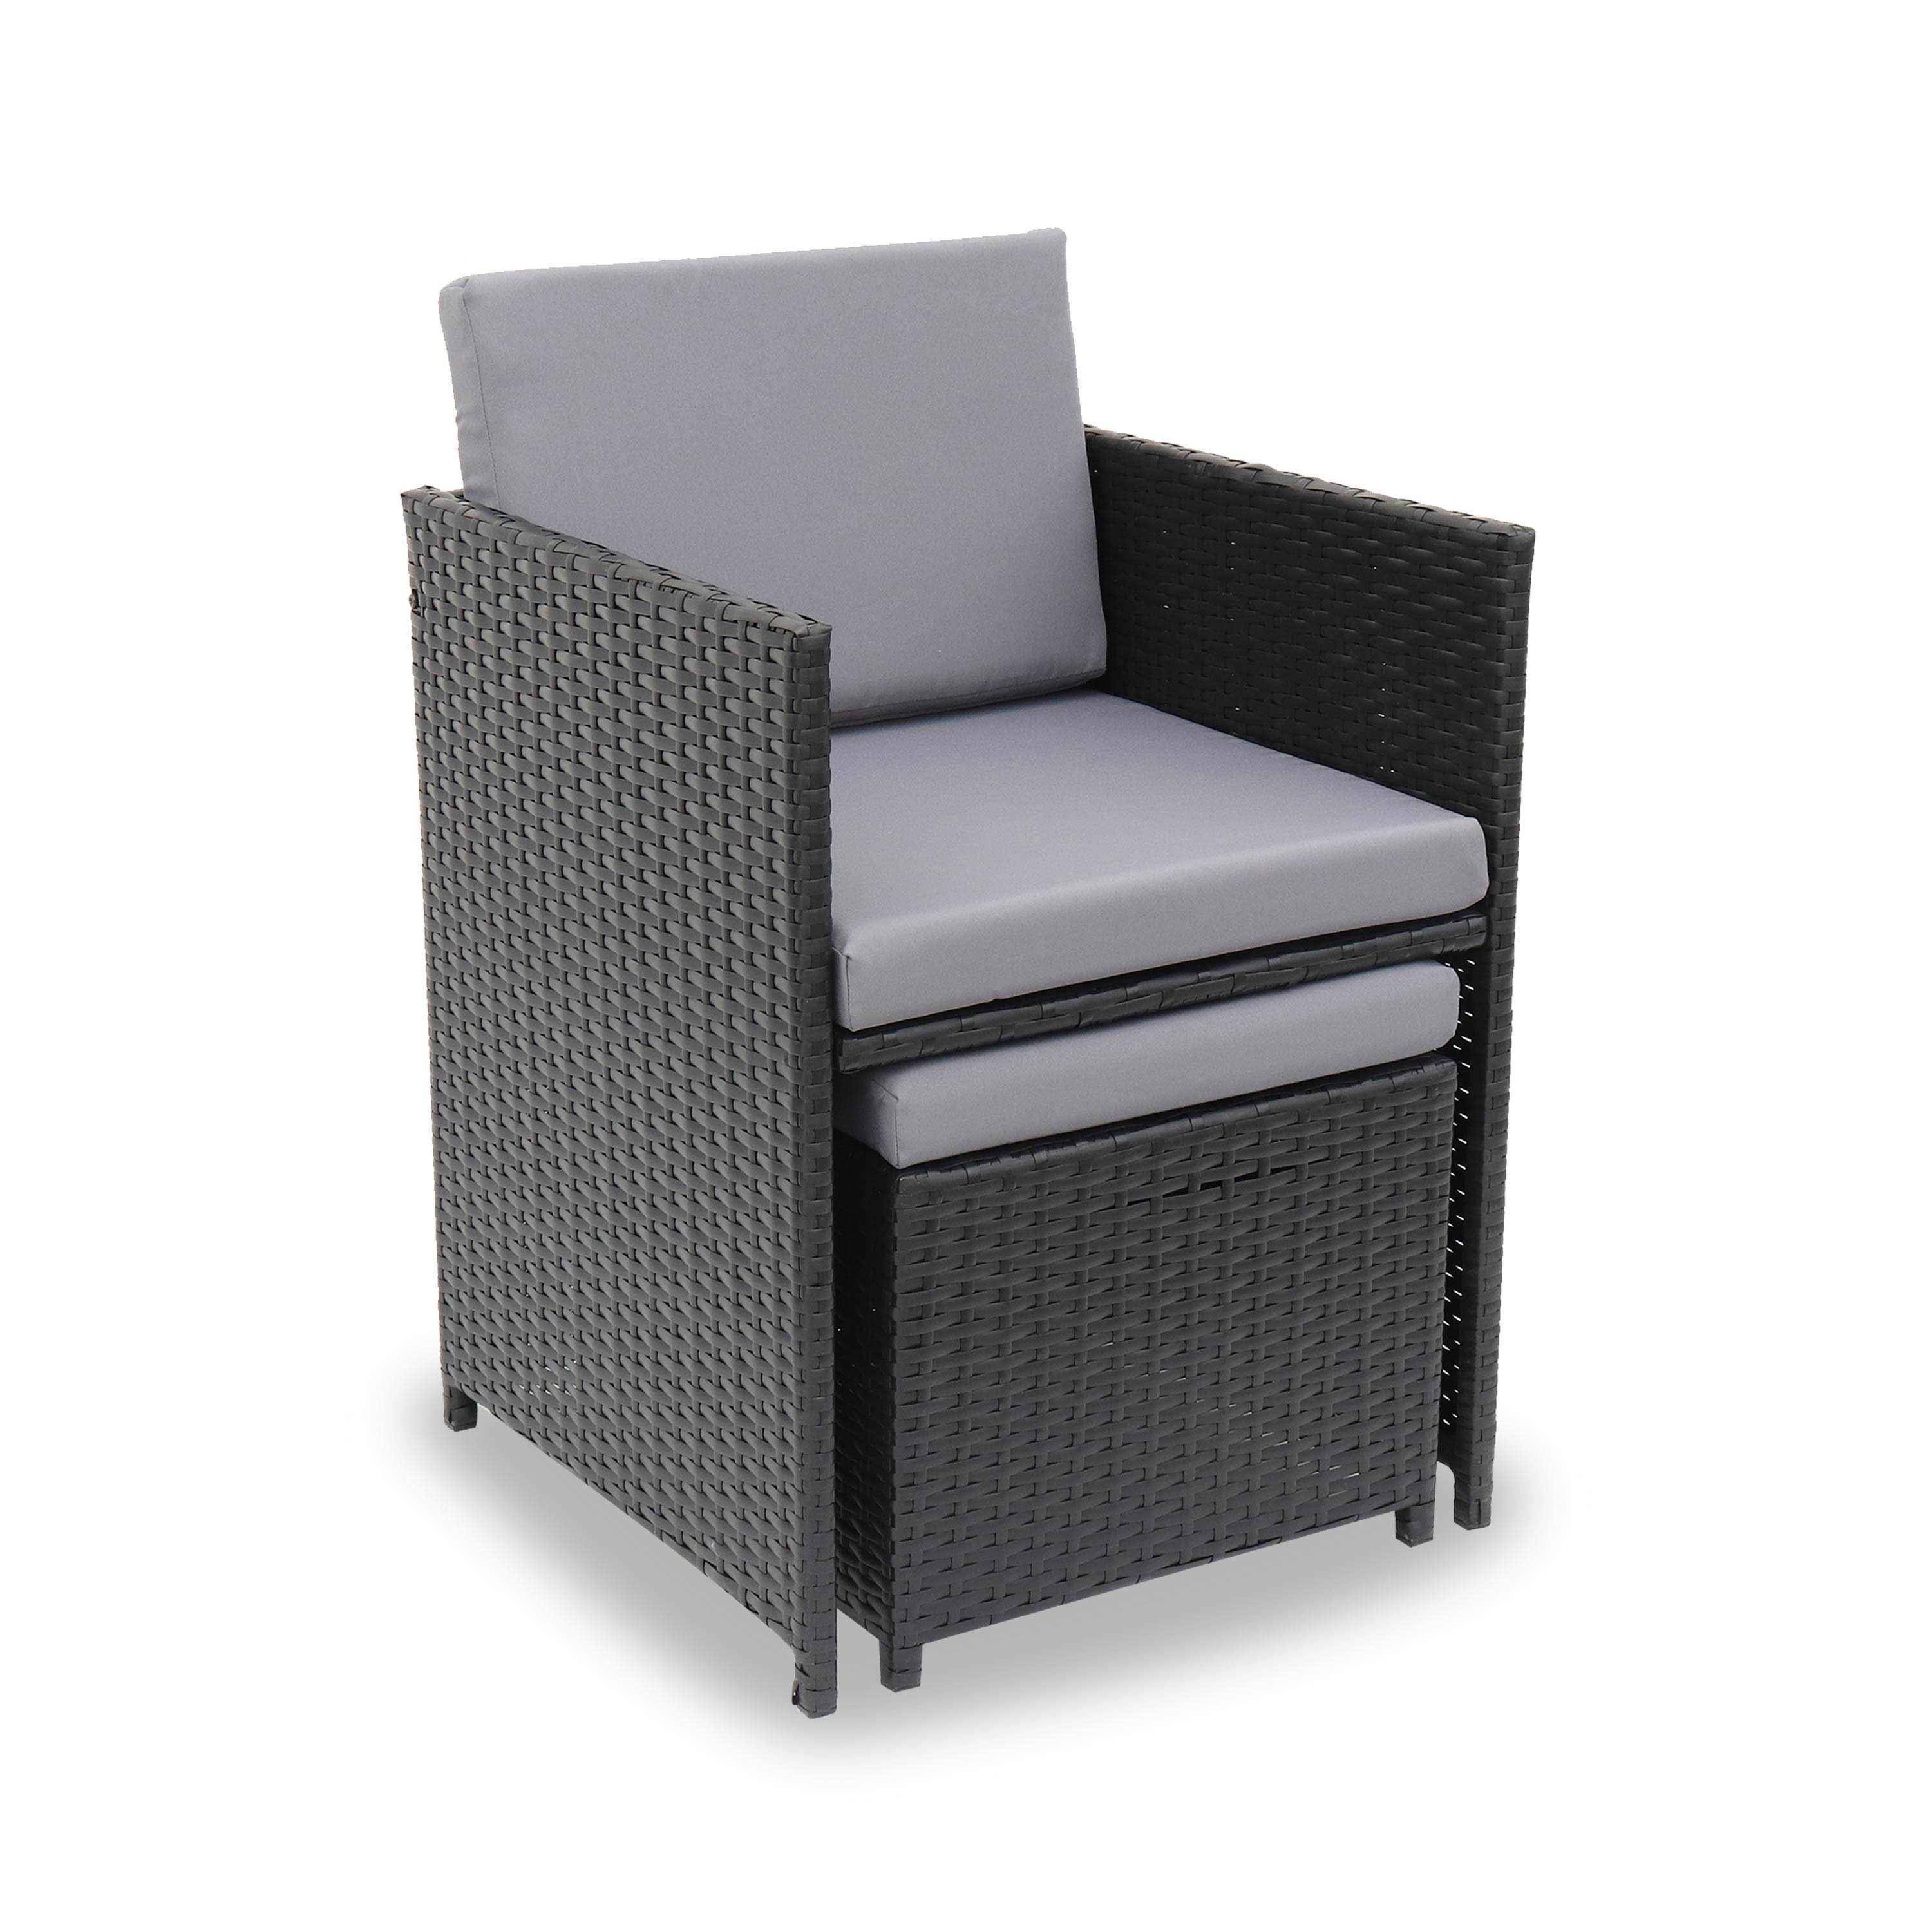 6 to 10-seater rattan cube table set - table, 6 armchairs, 2 footstools - Vabo 10 - Black rattan, Grey cushions,sweeek,Photo4